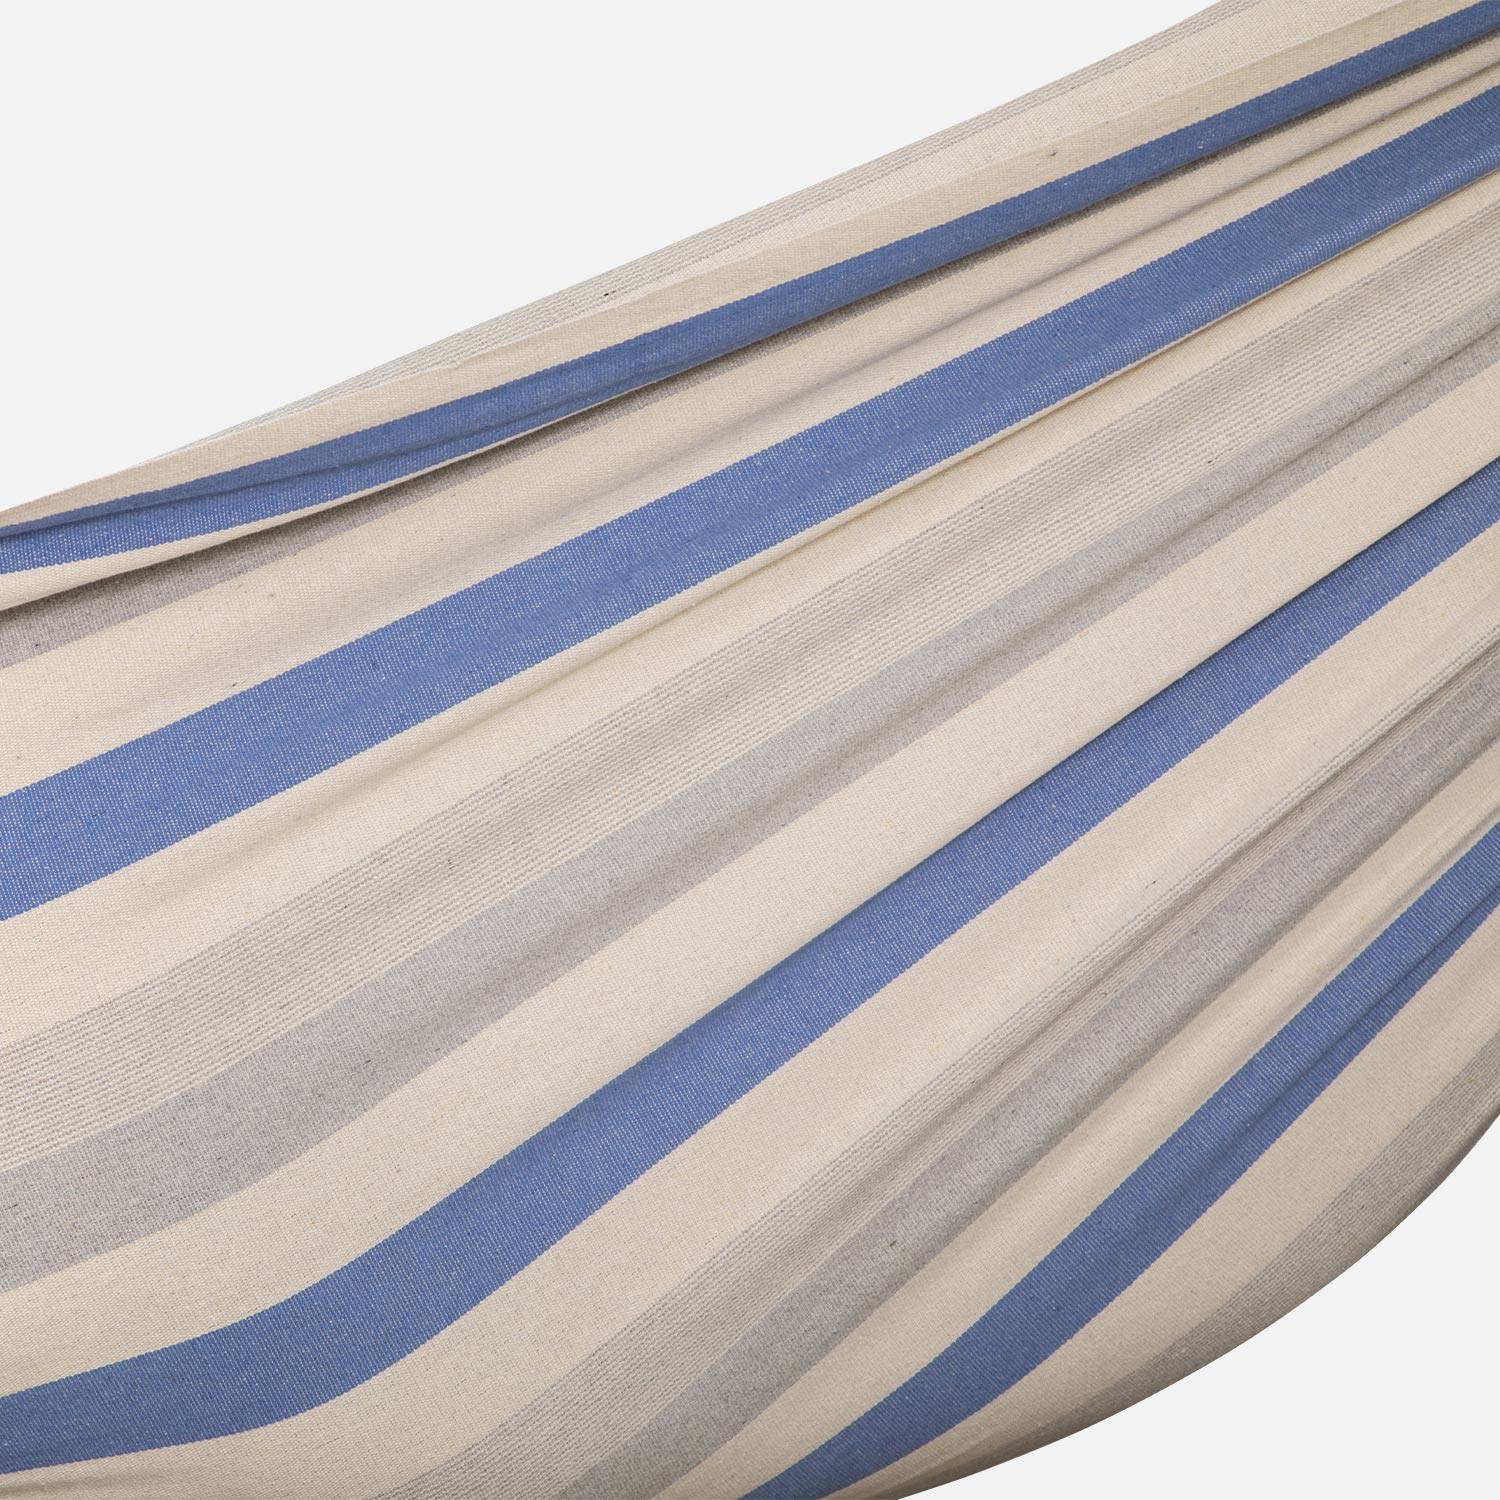 Funda de hamaca a rayas - azul turquesa / gris claro / crudo, 1 persona, 100% polialgodón, 220x140cm,sweeek,Photo5